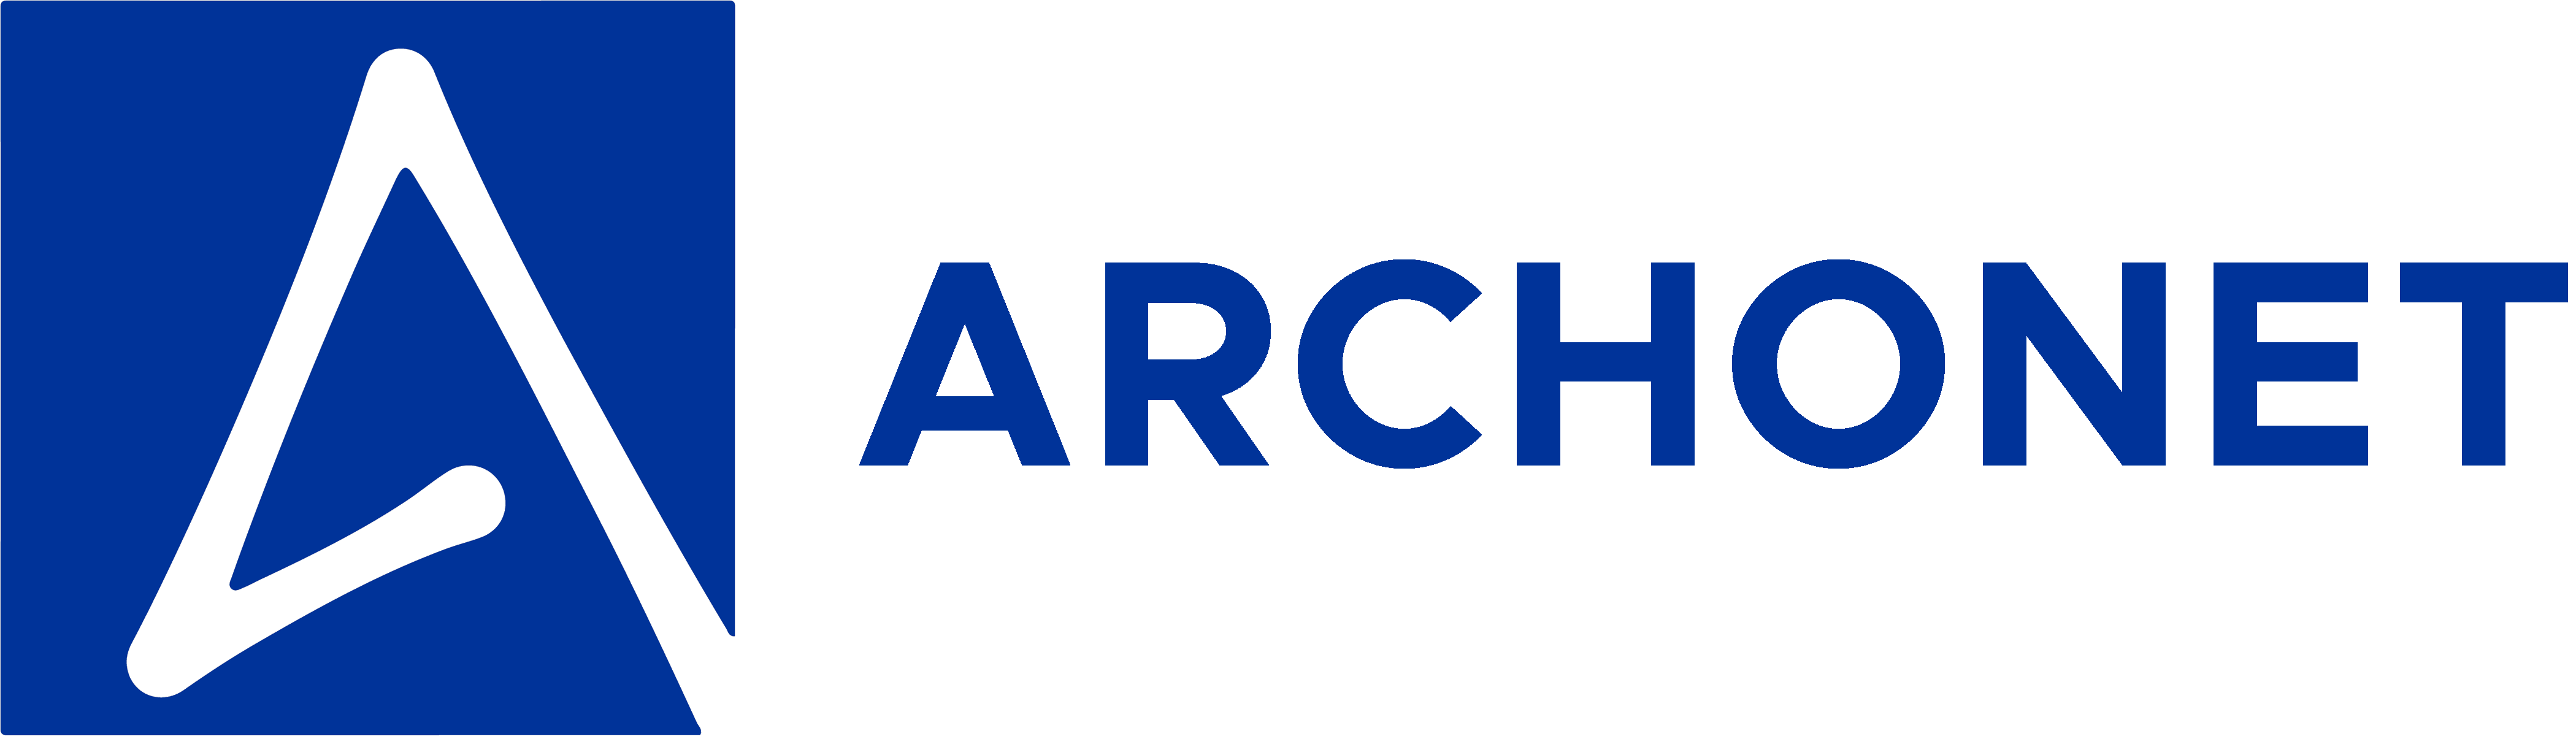 archonet-logo